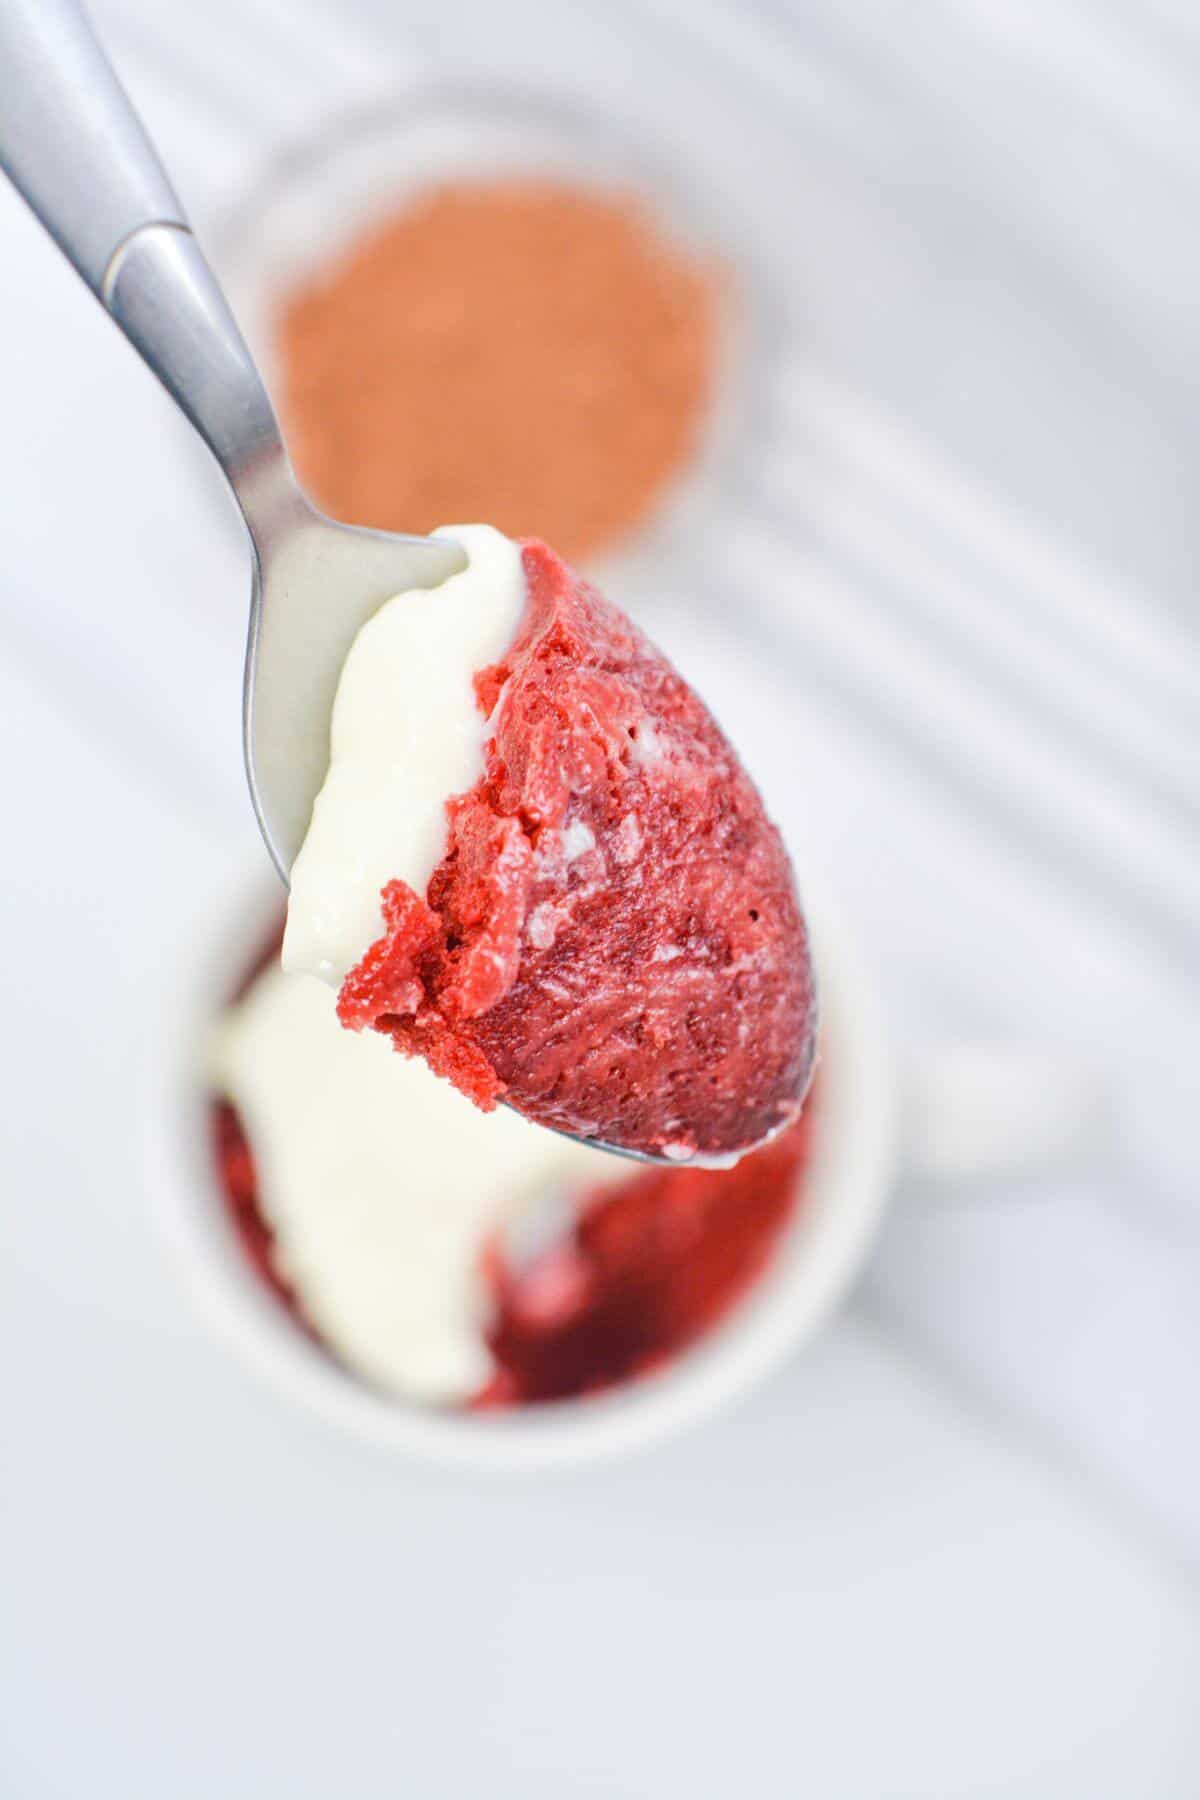 Frosted red velvet cake on spoon.